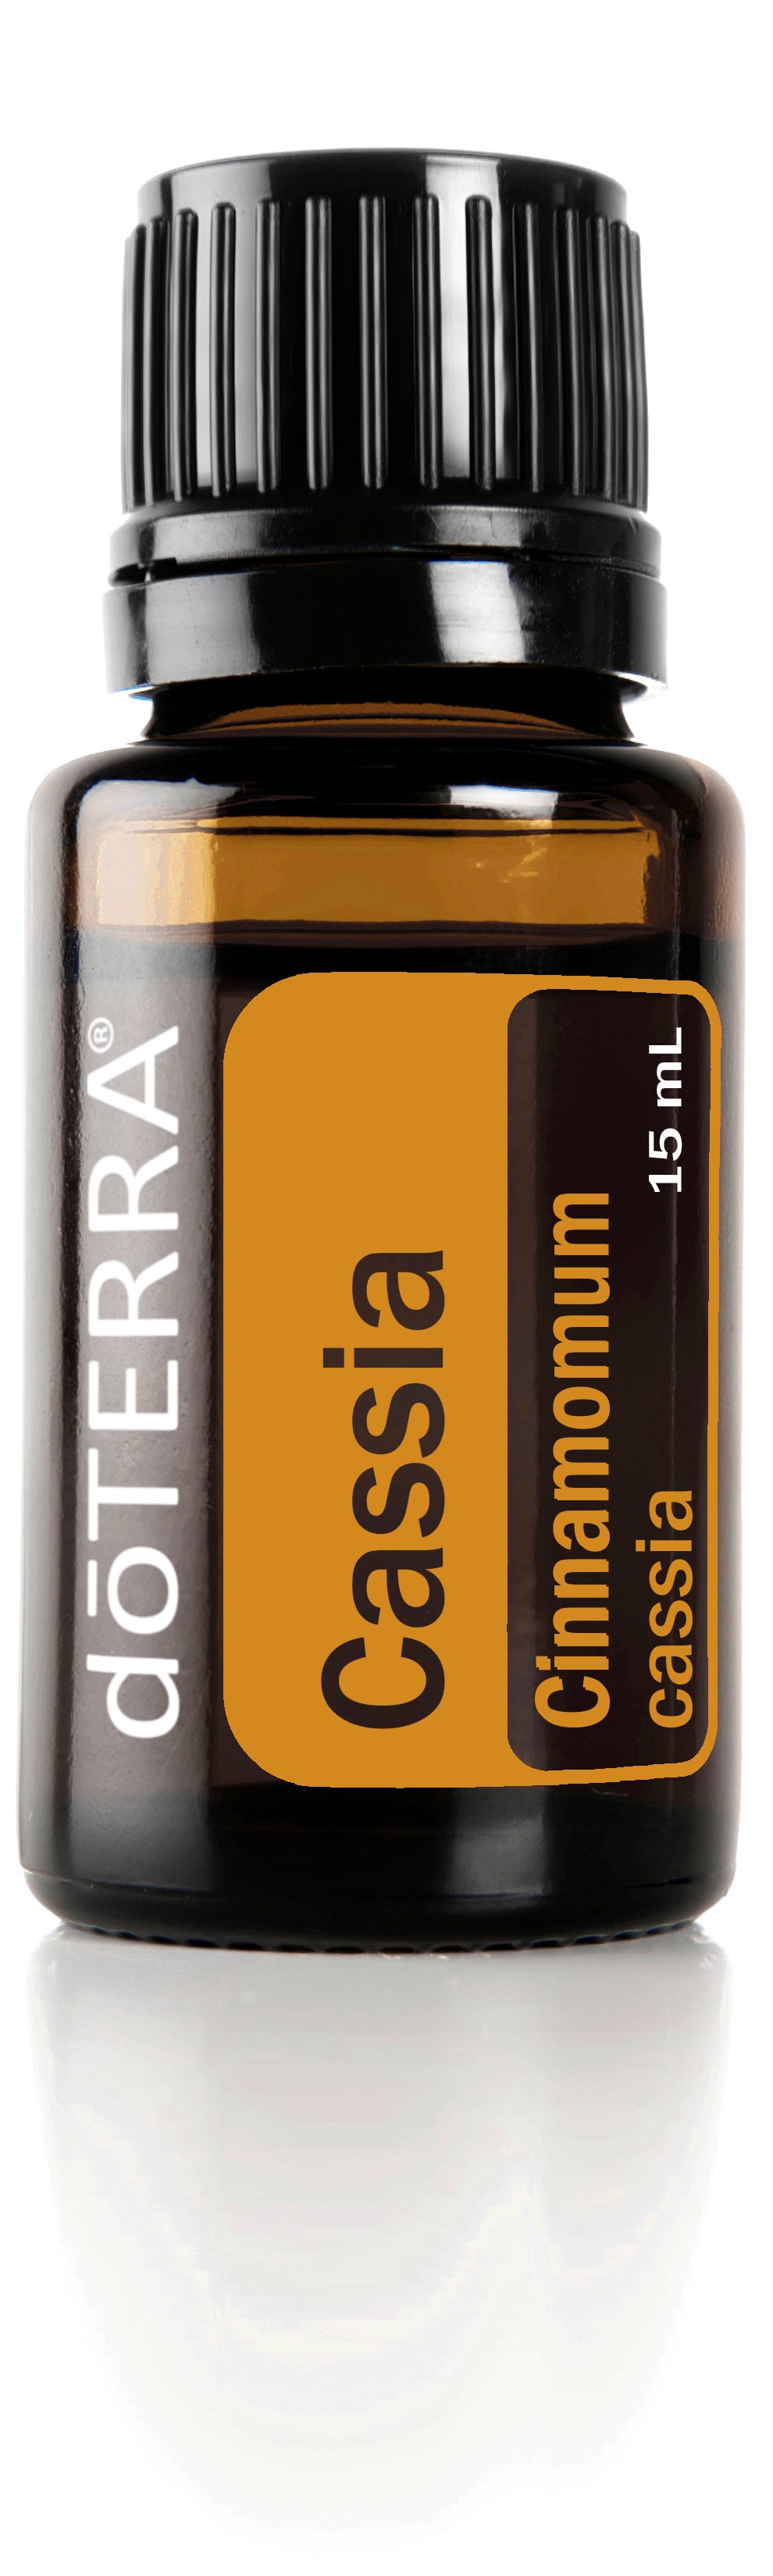 doTERRA  Essential Oils, Singles